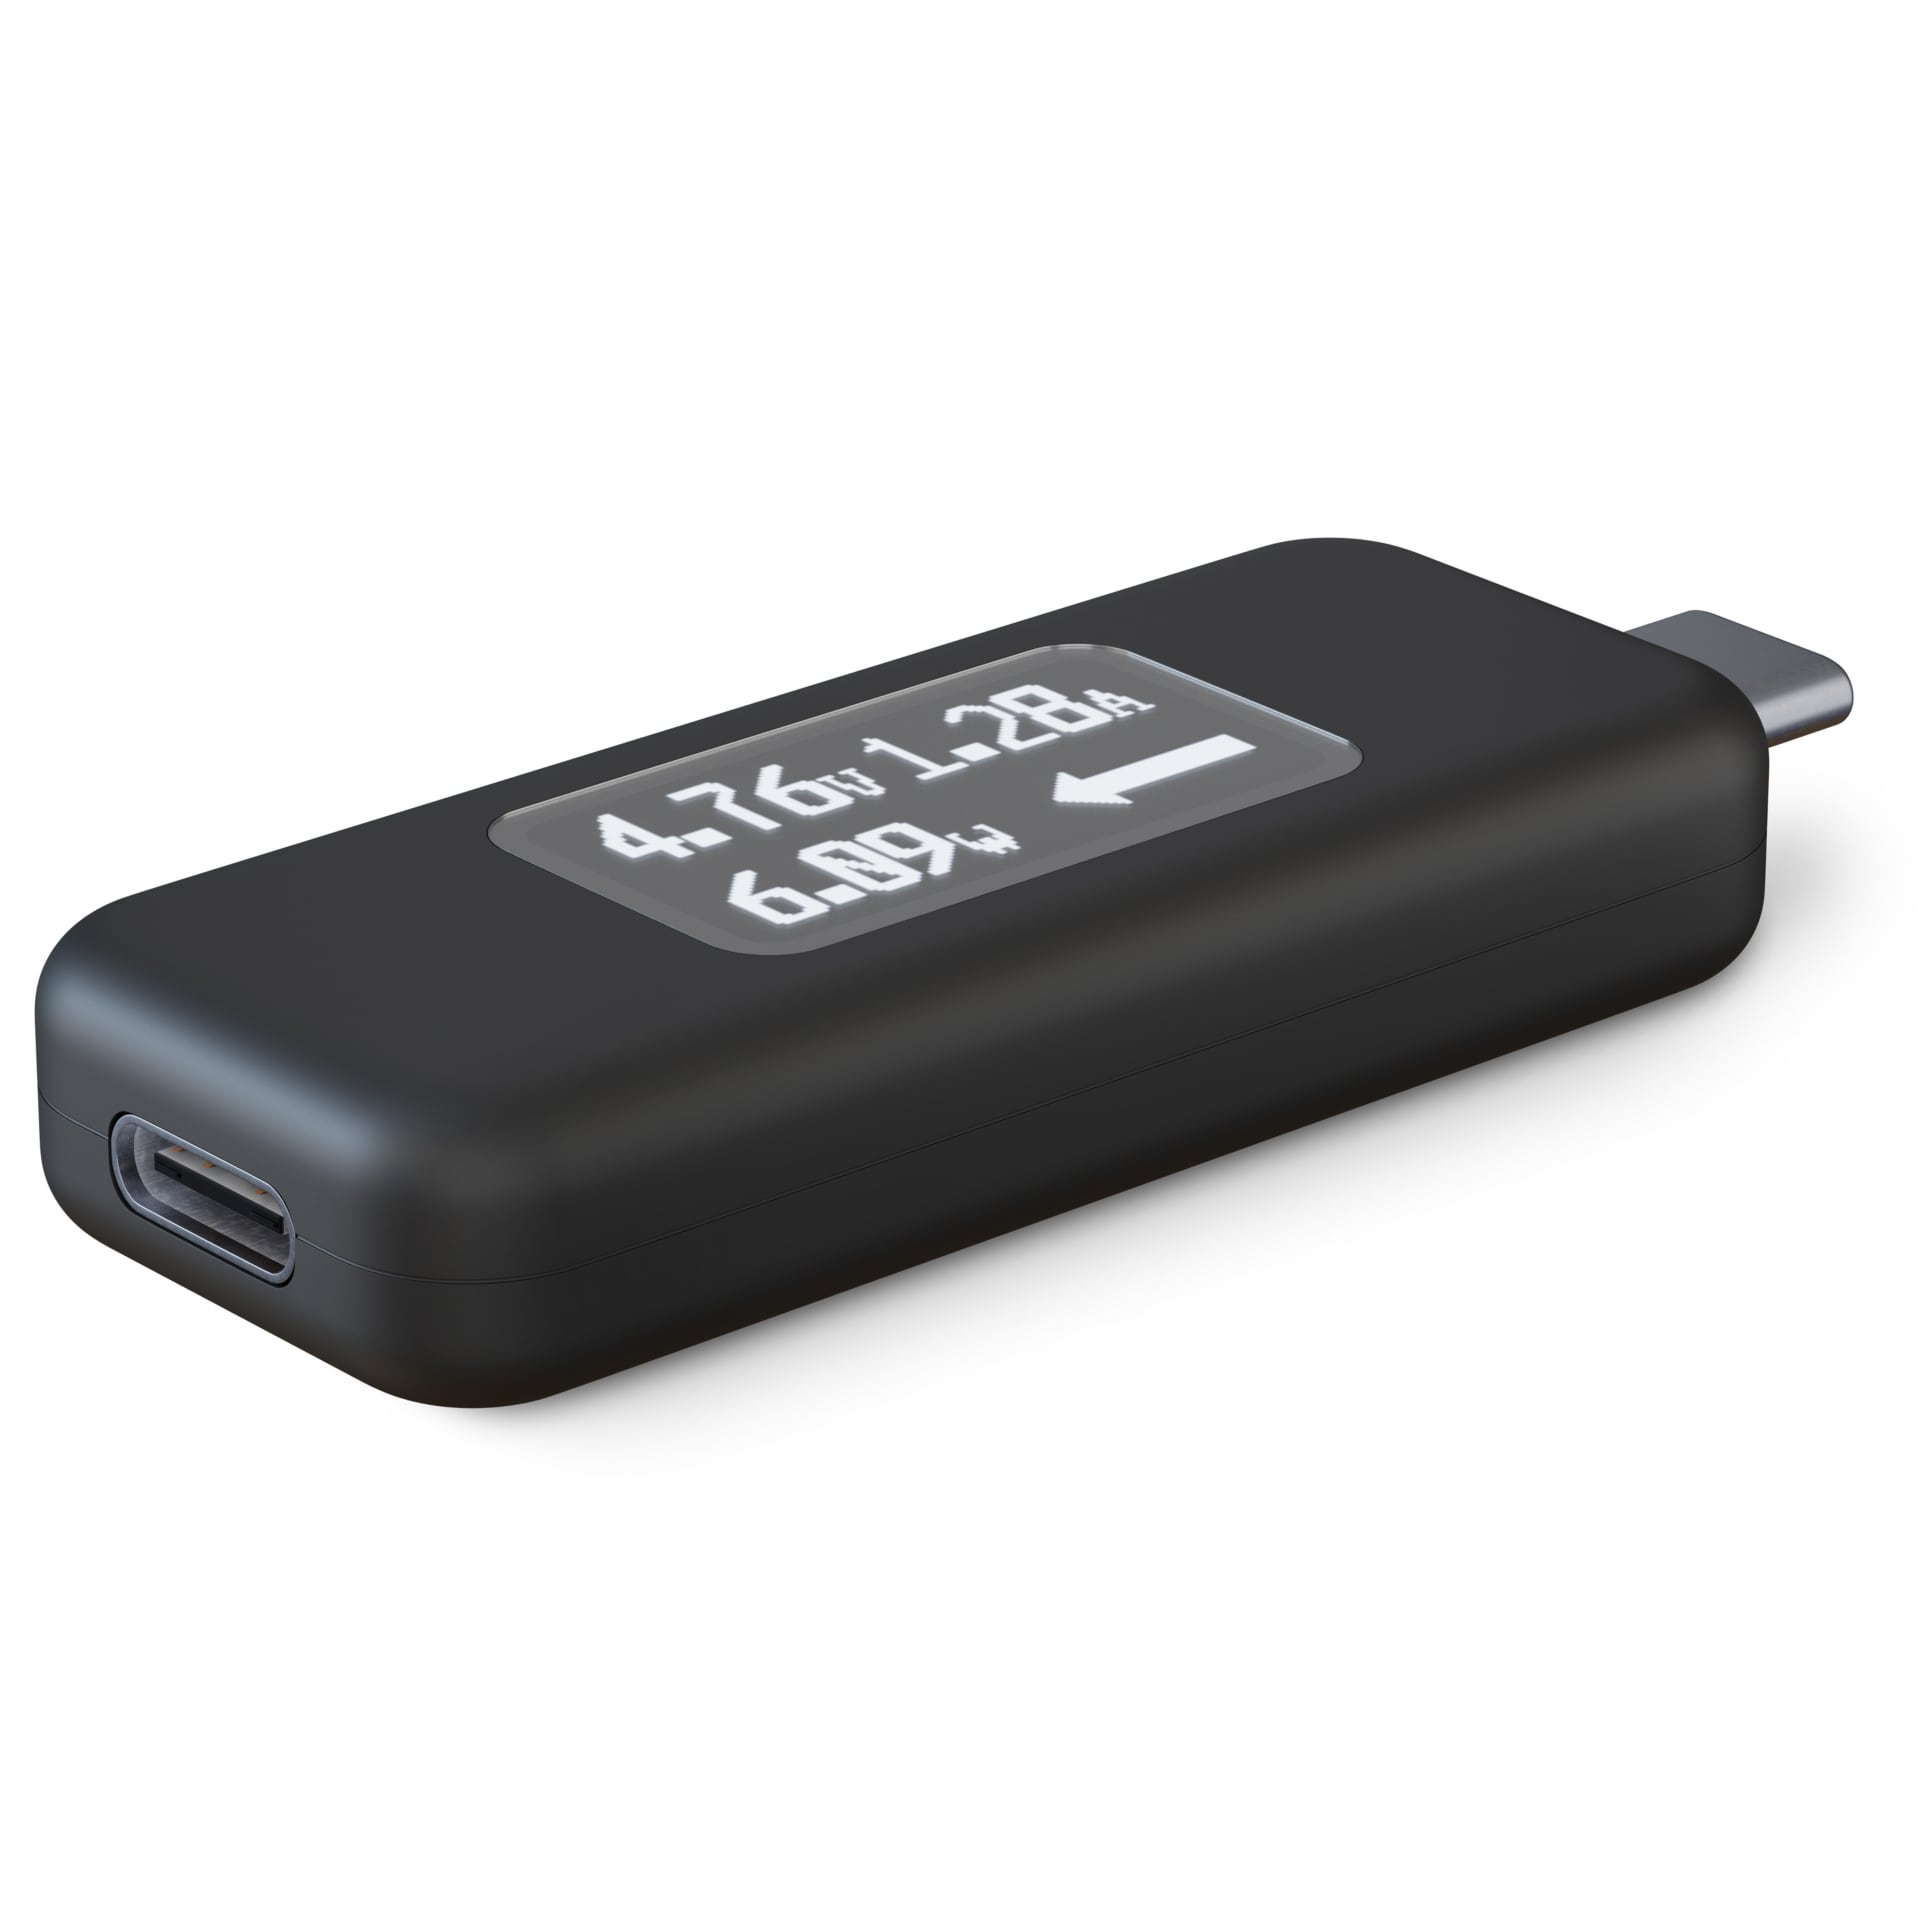 Plugable USB C Power Meter Tester for USB-C Connections,Driverless - USBC-VAMETER  - Network Testing 